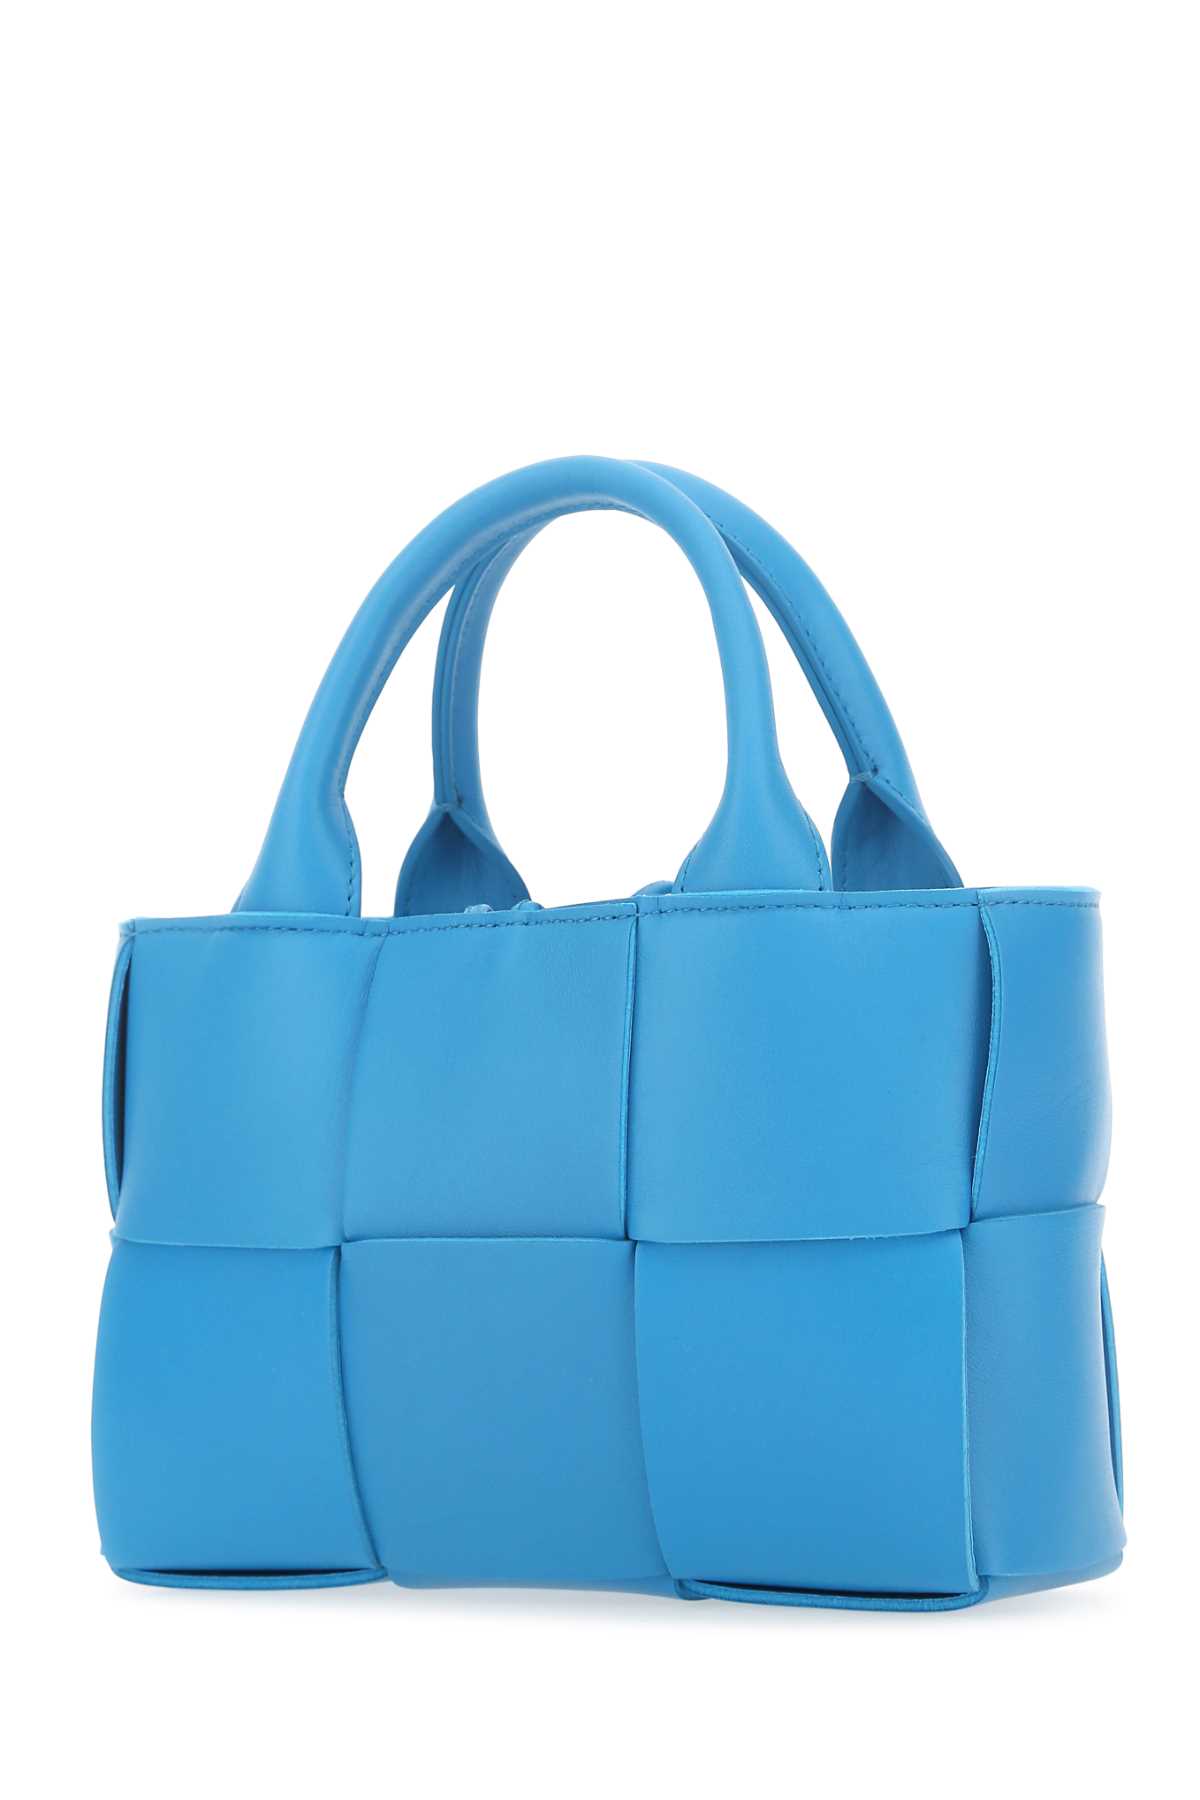 Bottega Veneta Turquoise Leather Candy Arco Handbag In 4619